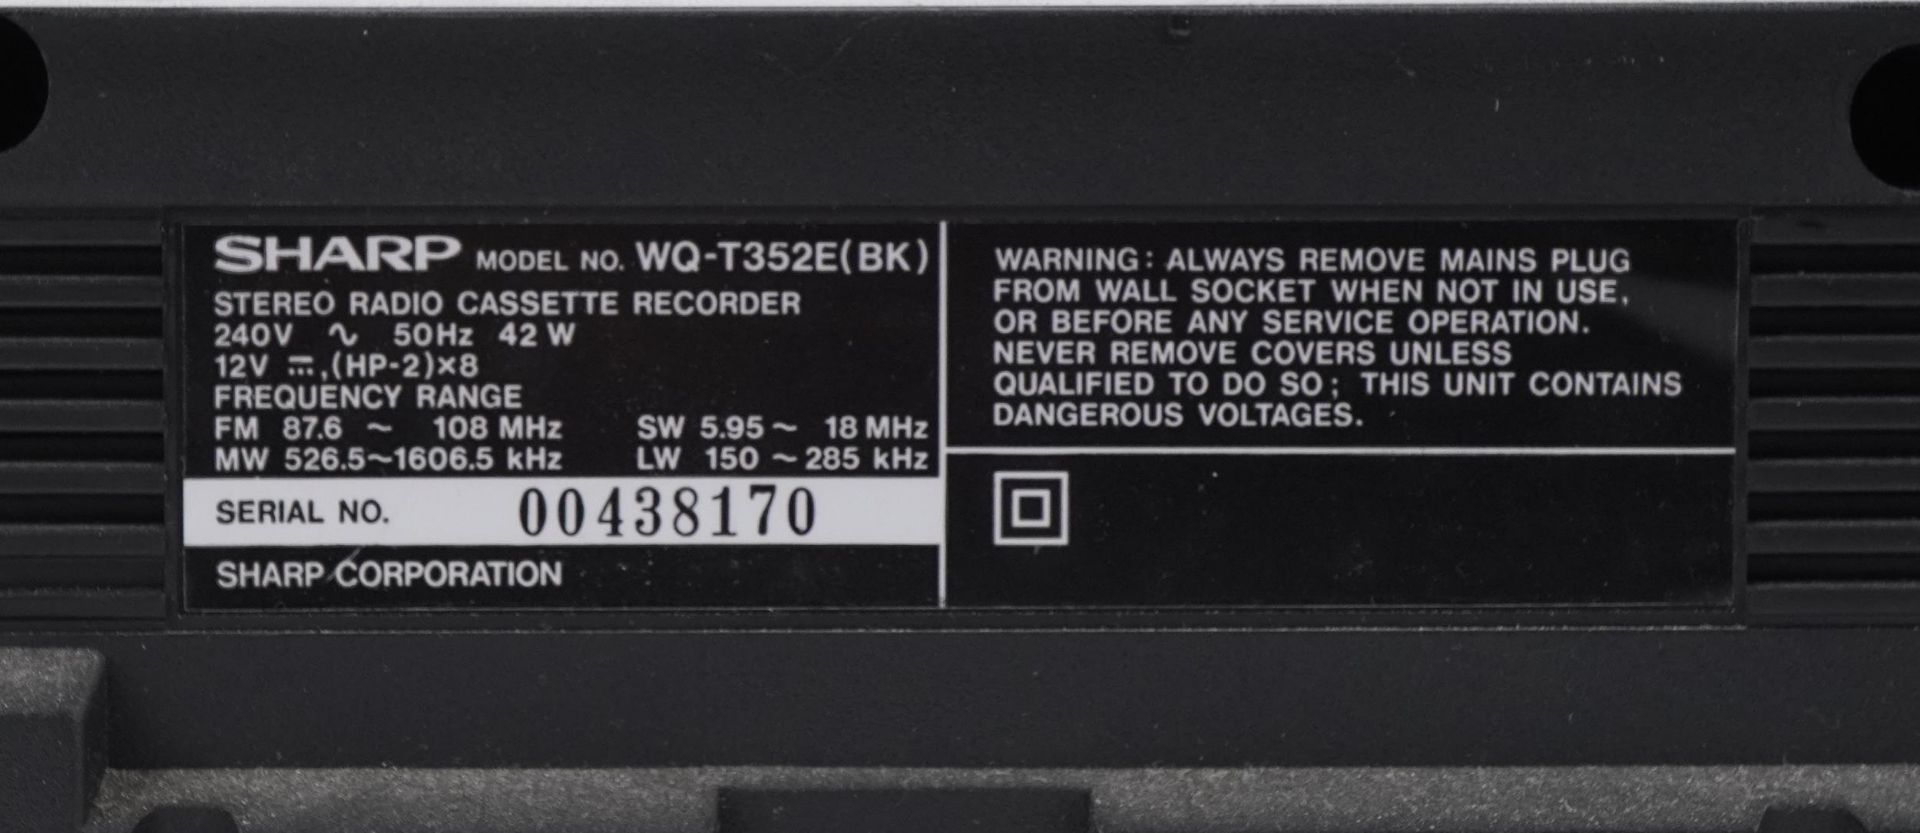 Vintage Sharp stereo radio cassette recorder, model WQ-T352E (BK) : For further information on - Image 3 of 3